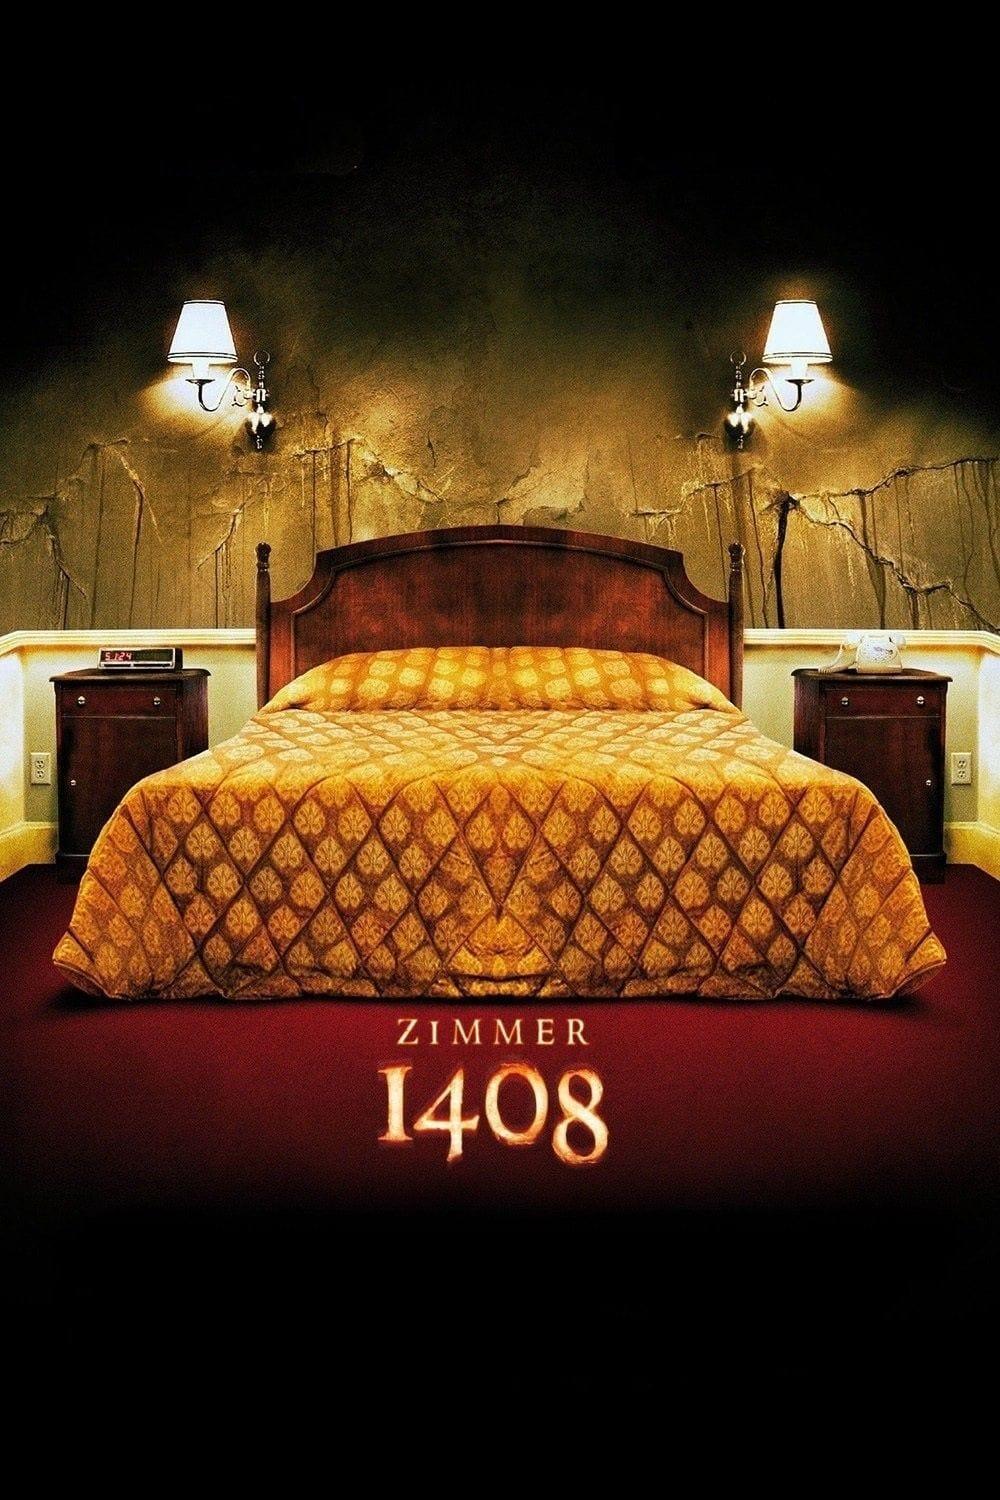 Zimmer 1408 poster